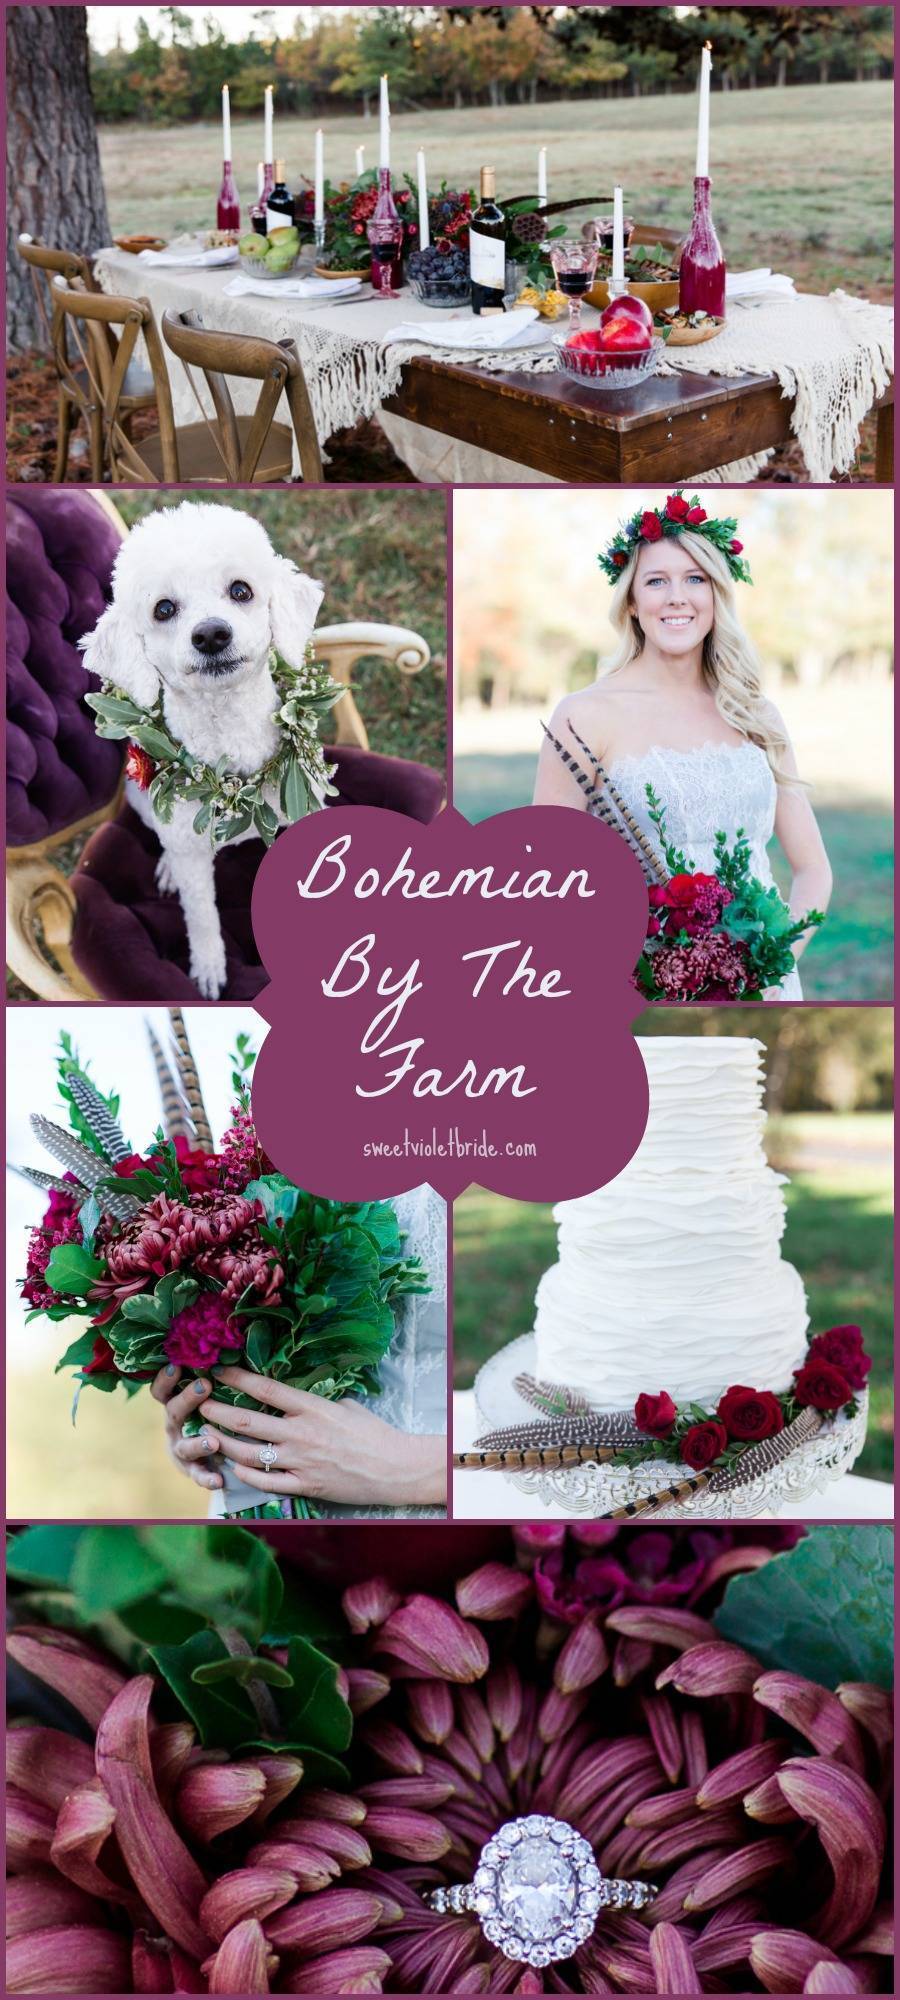 Bohemian By The Farm 87